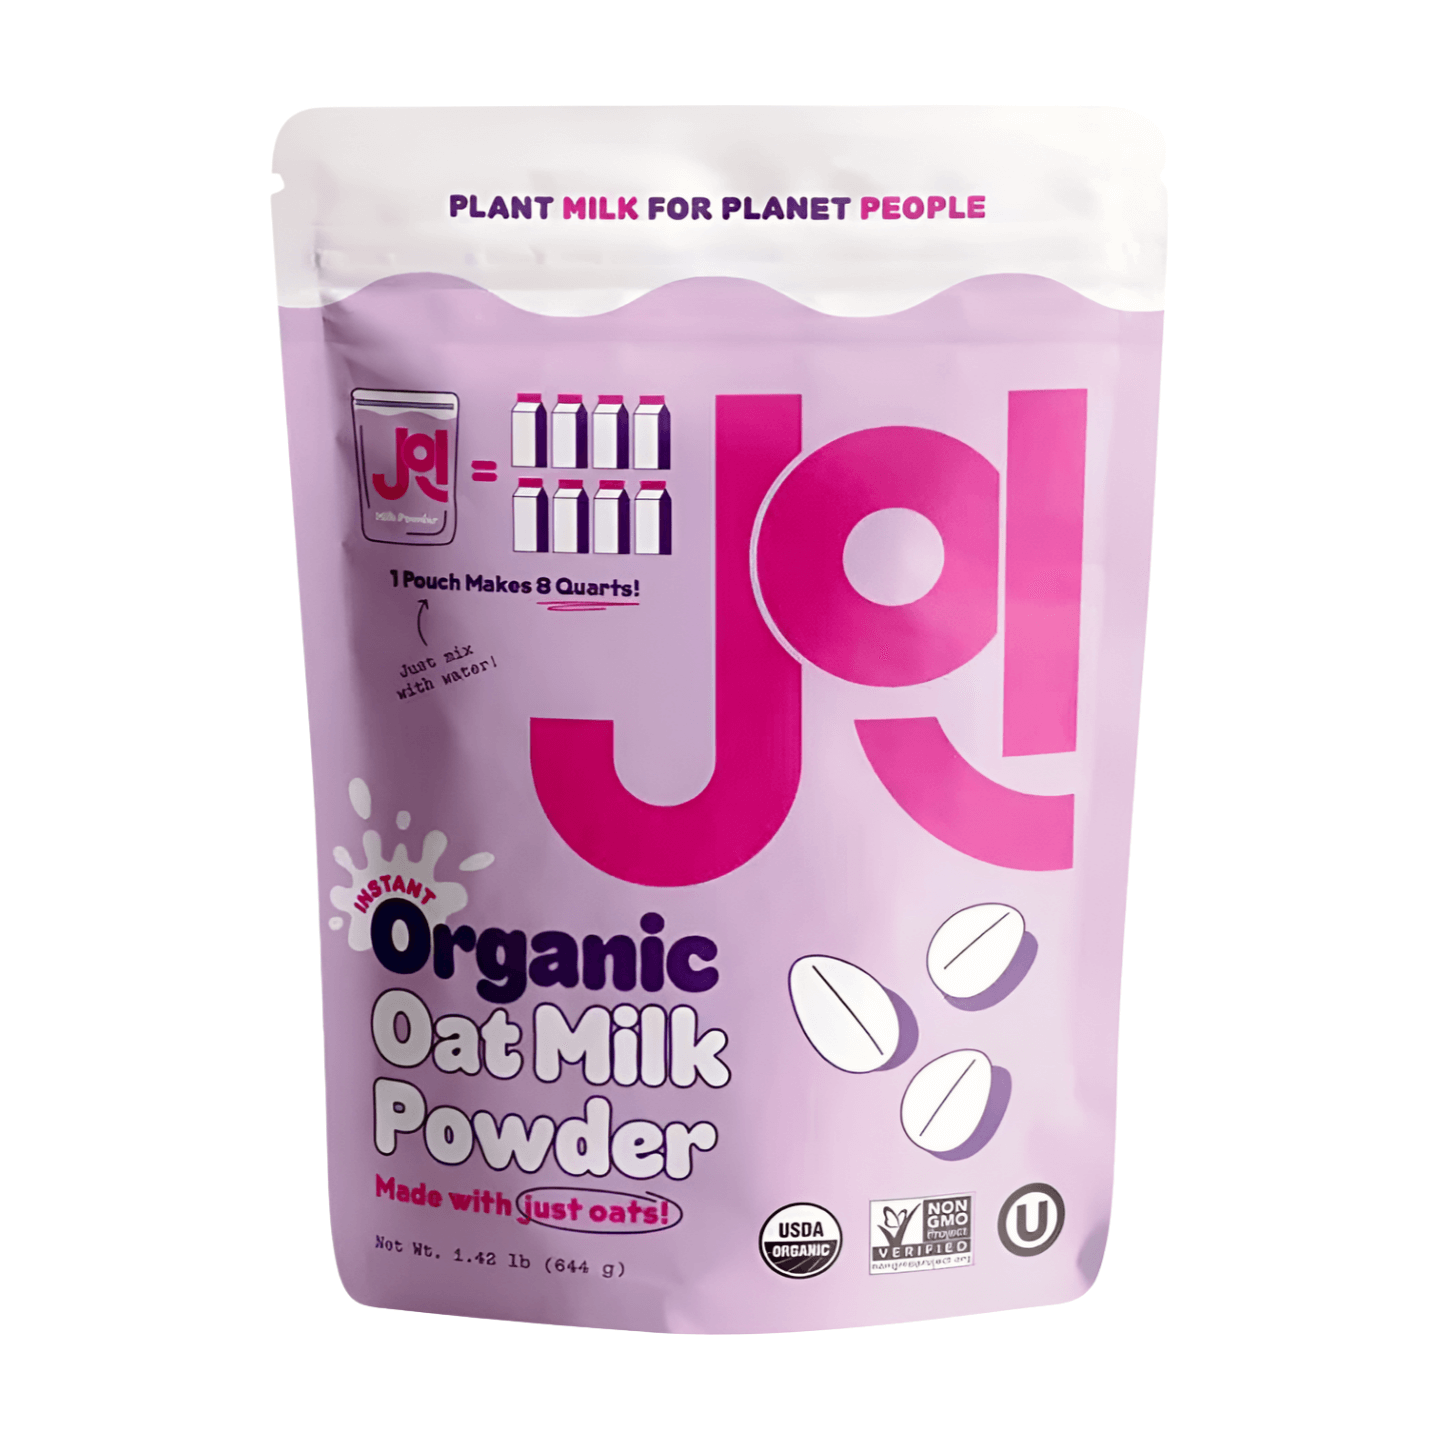 JOI Instant Organic Oat Milk Powder